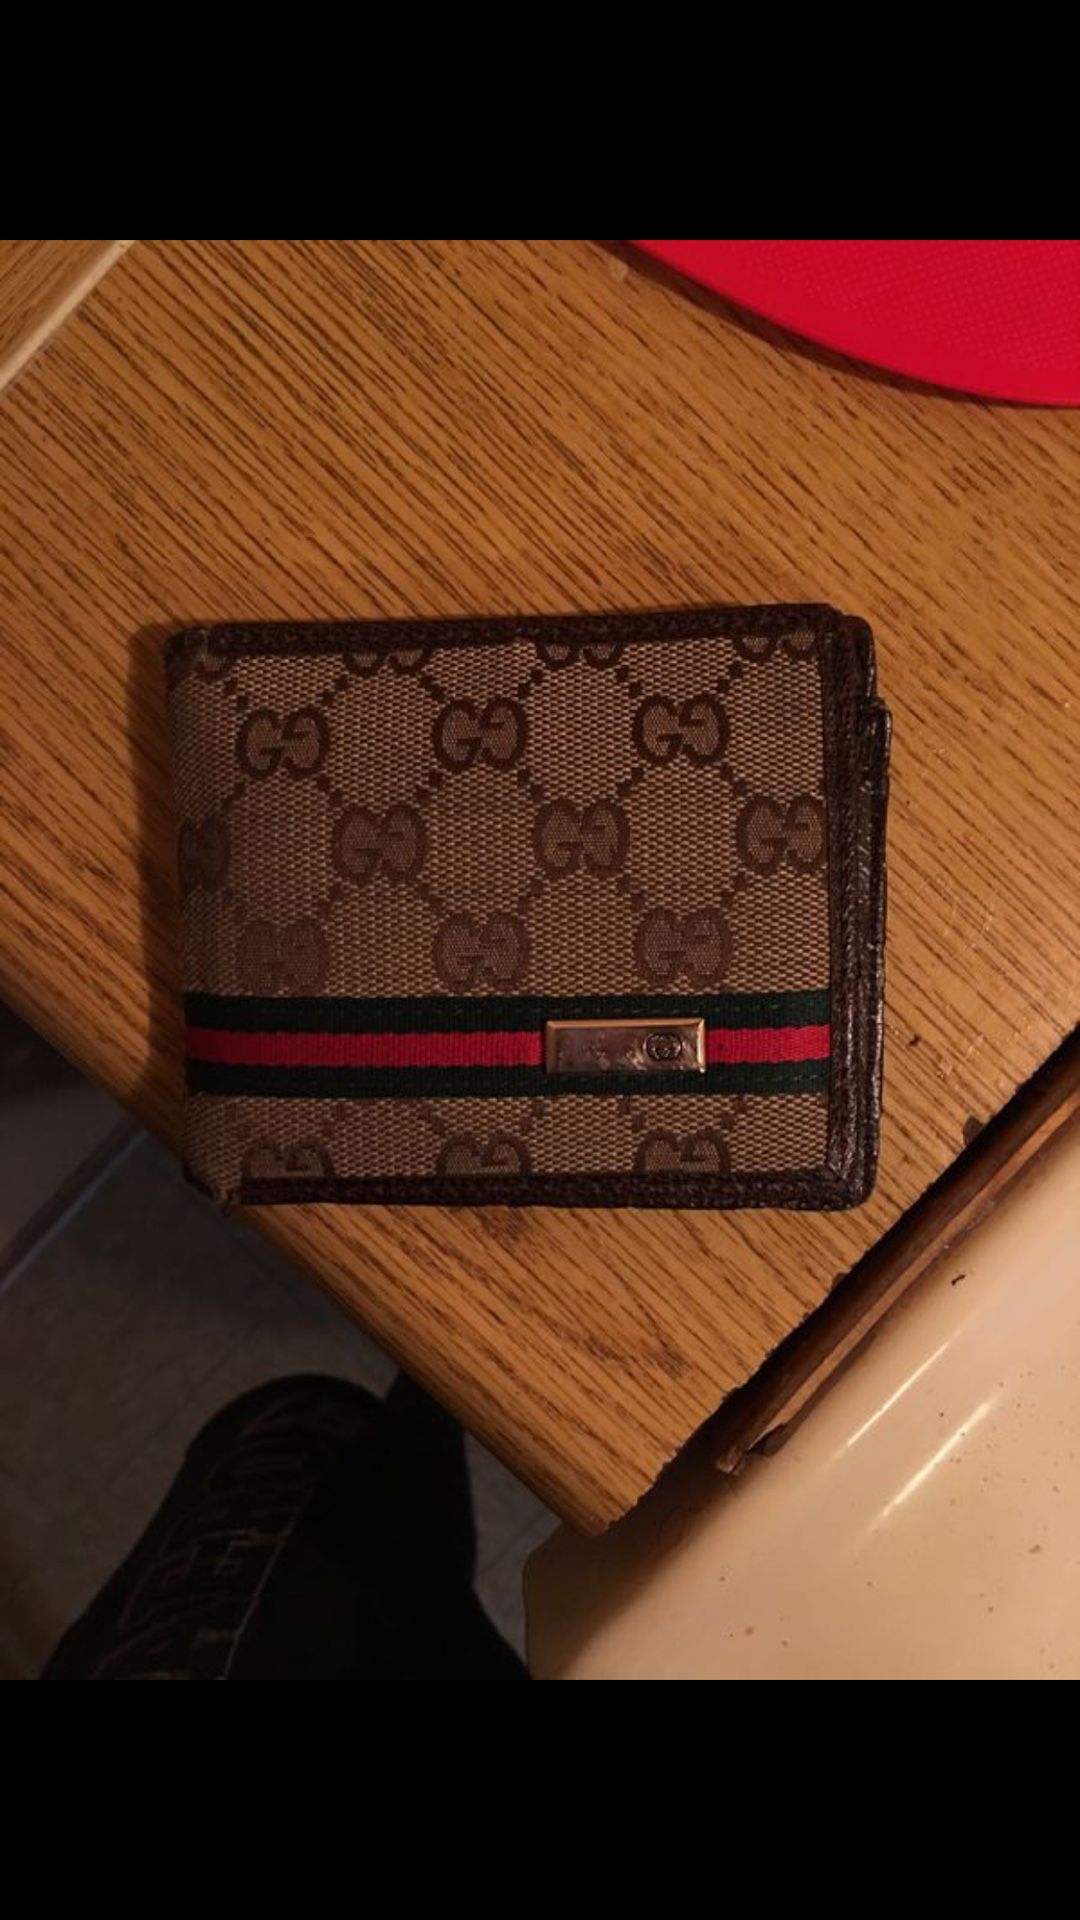 Old vintage Gucci wallet